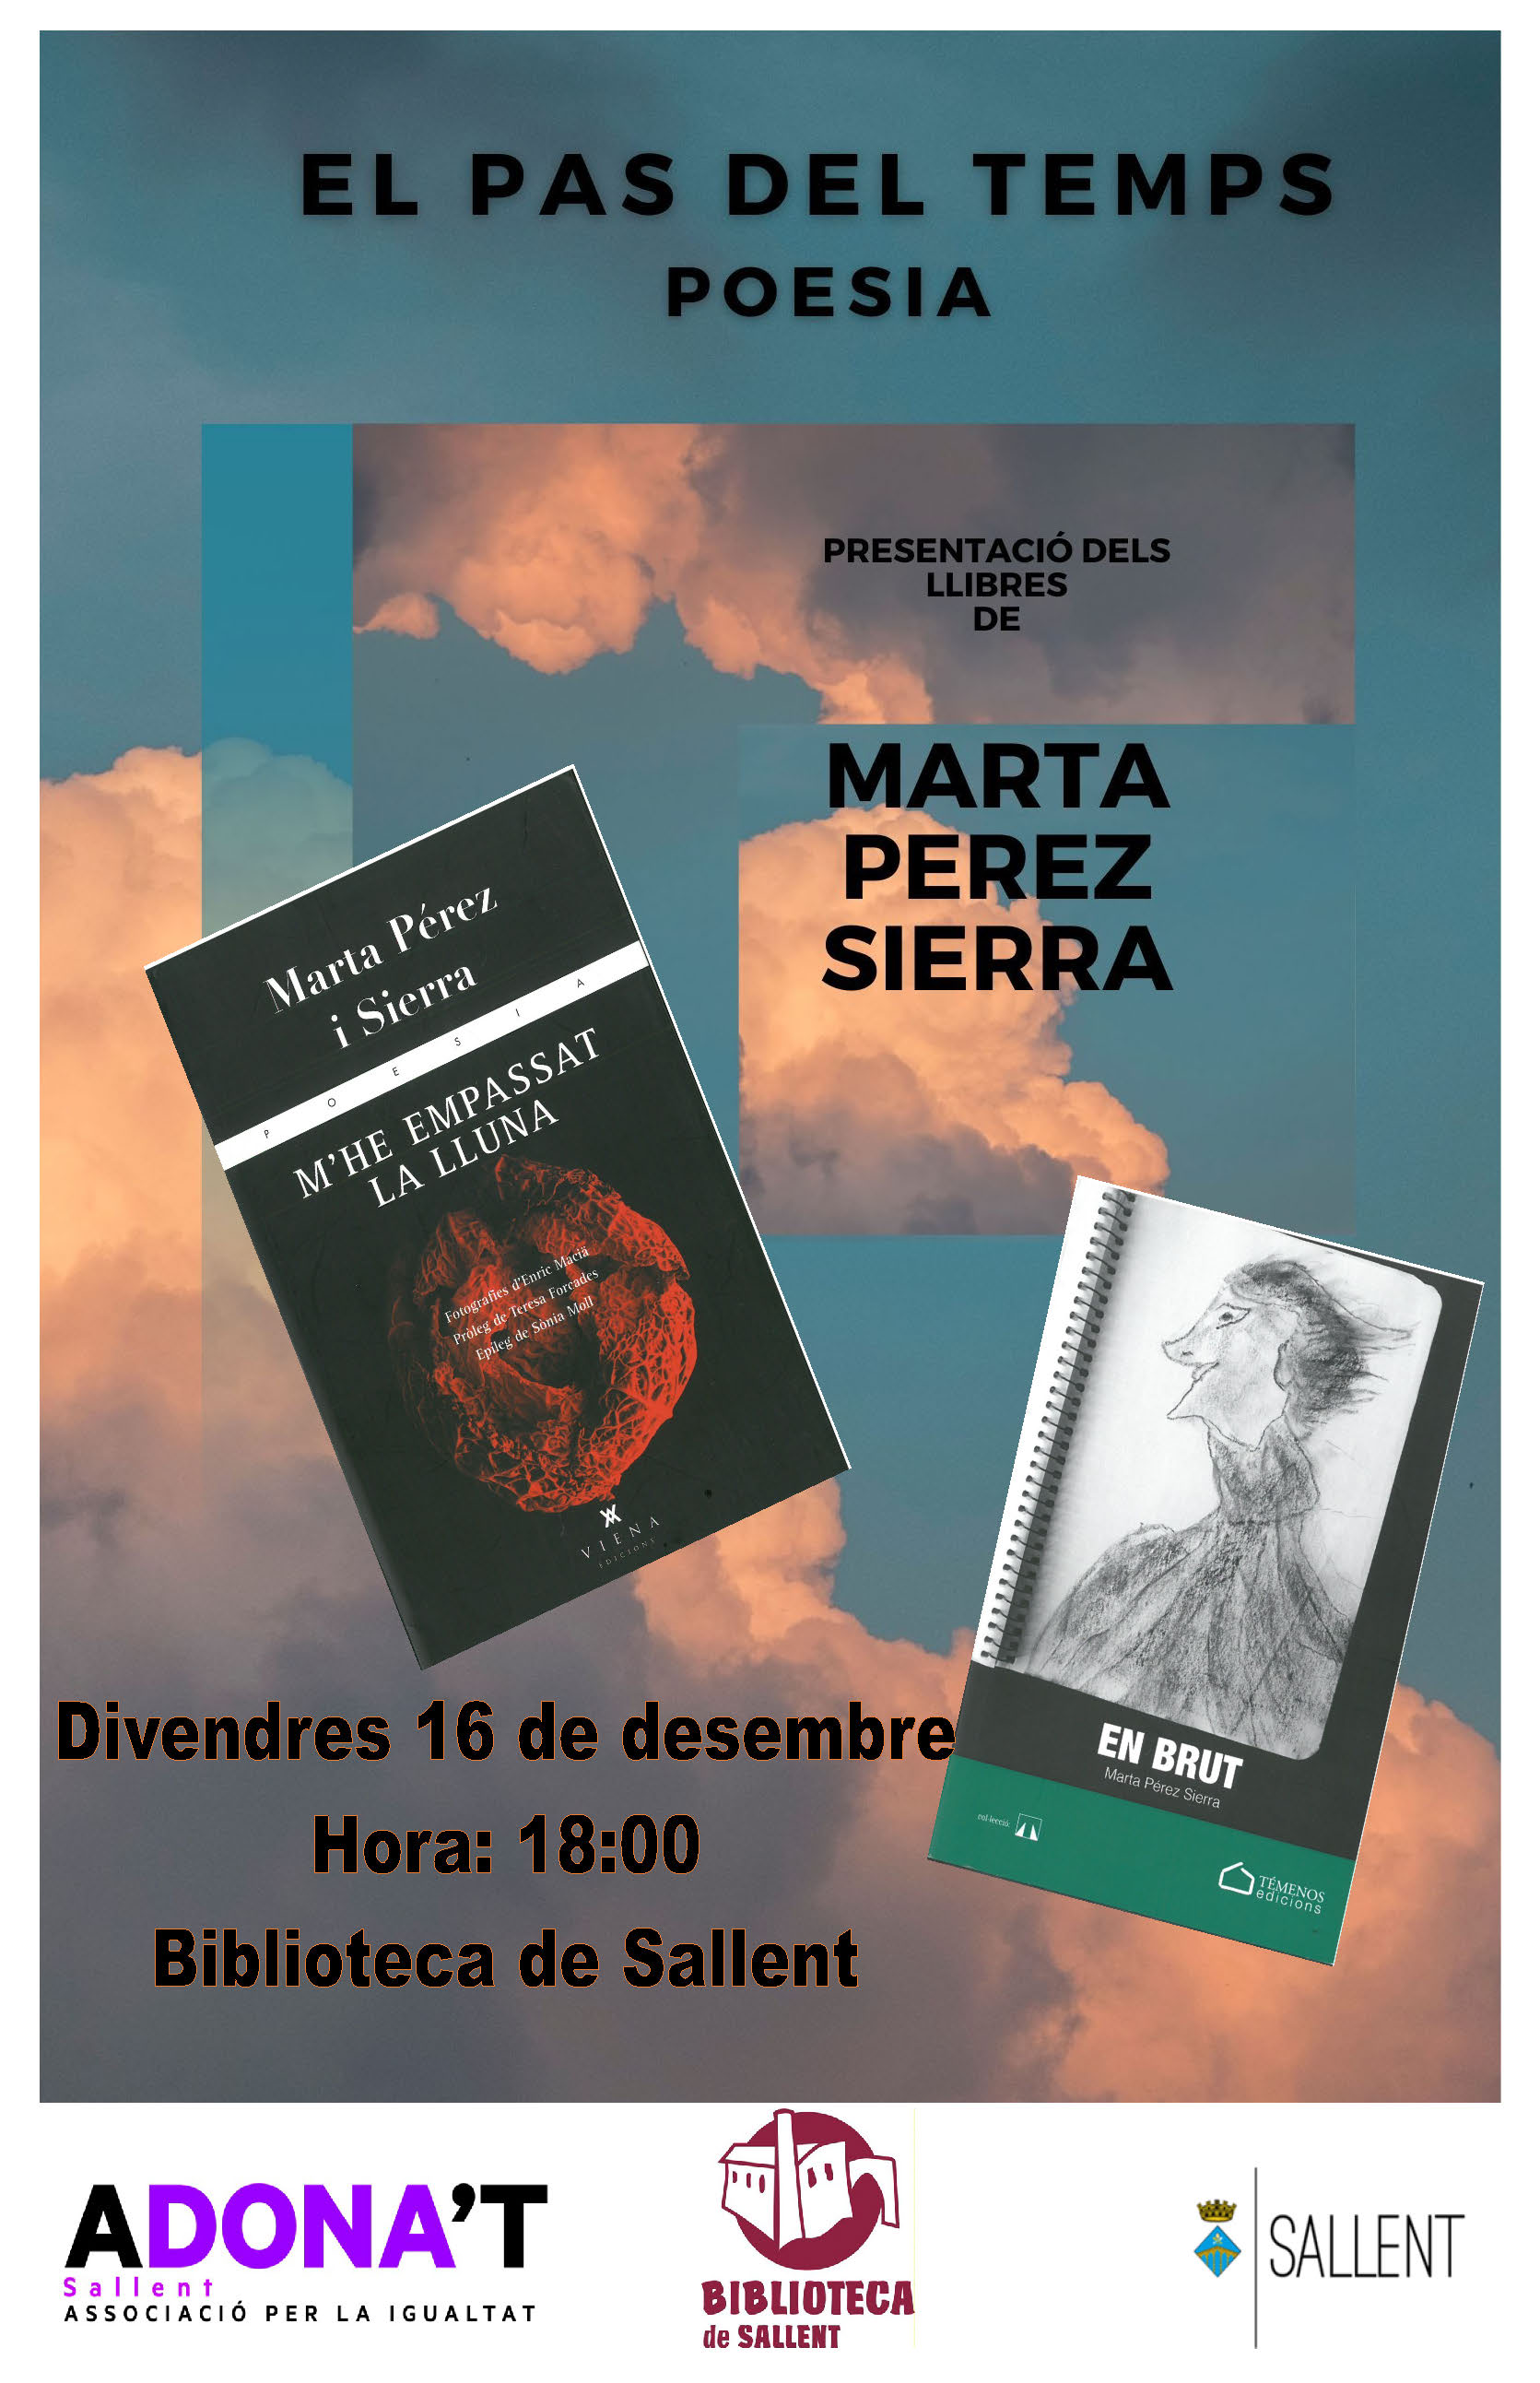 Presentació de llibres de poesia Marta Pérez Sierra